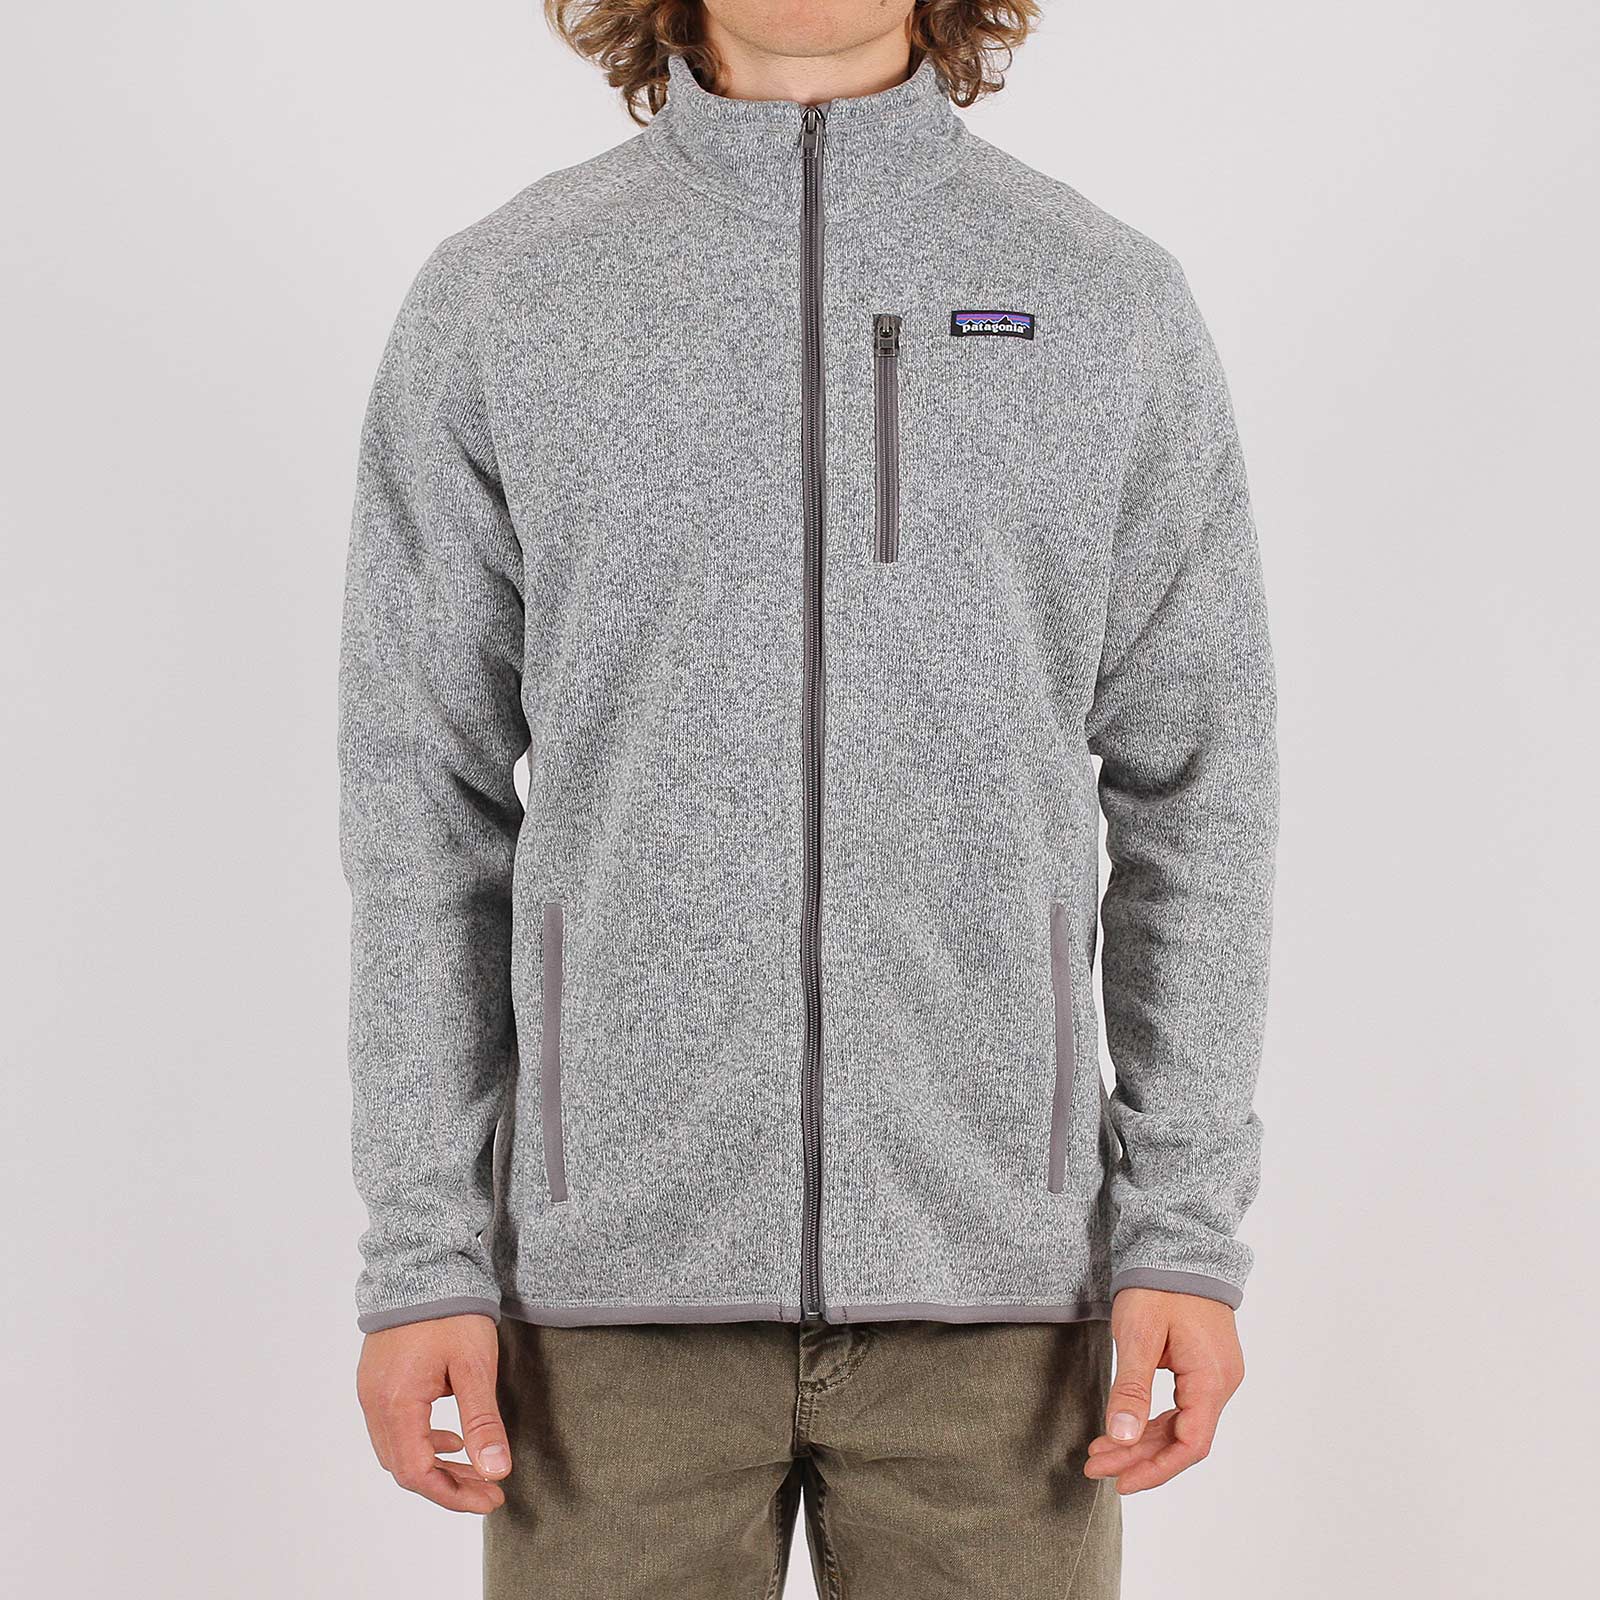 patagonia better sweater full zip hoodie